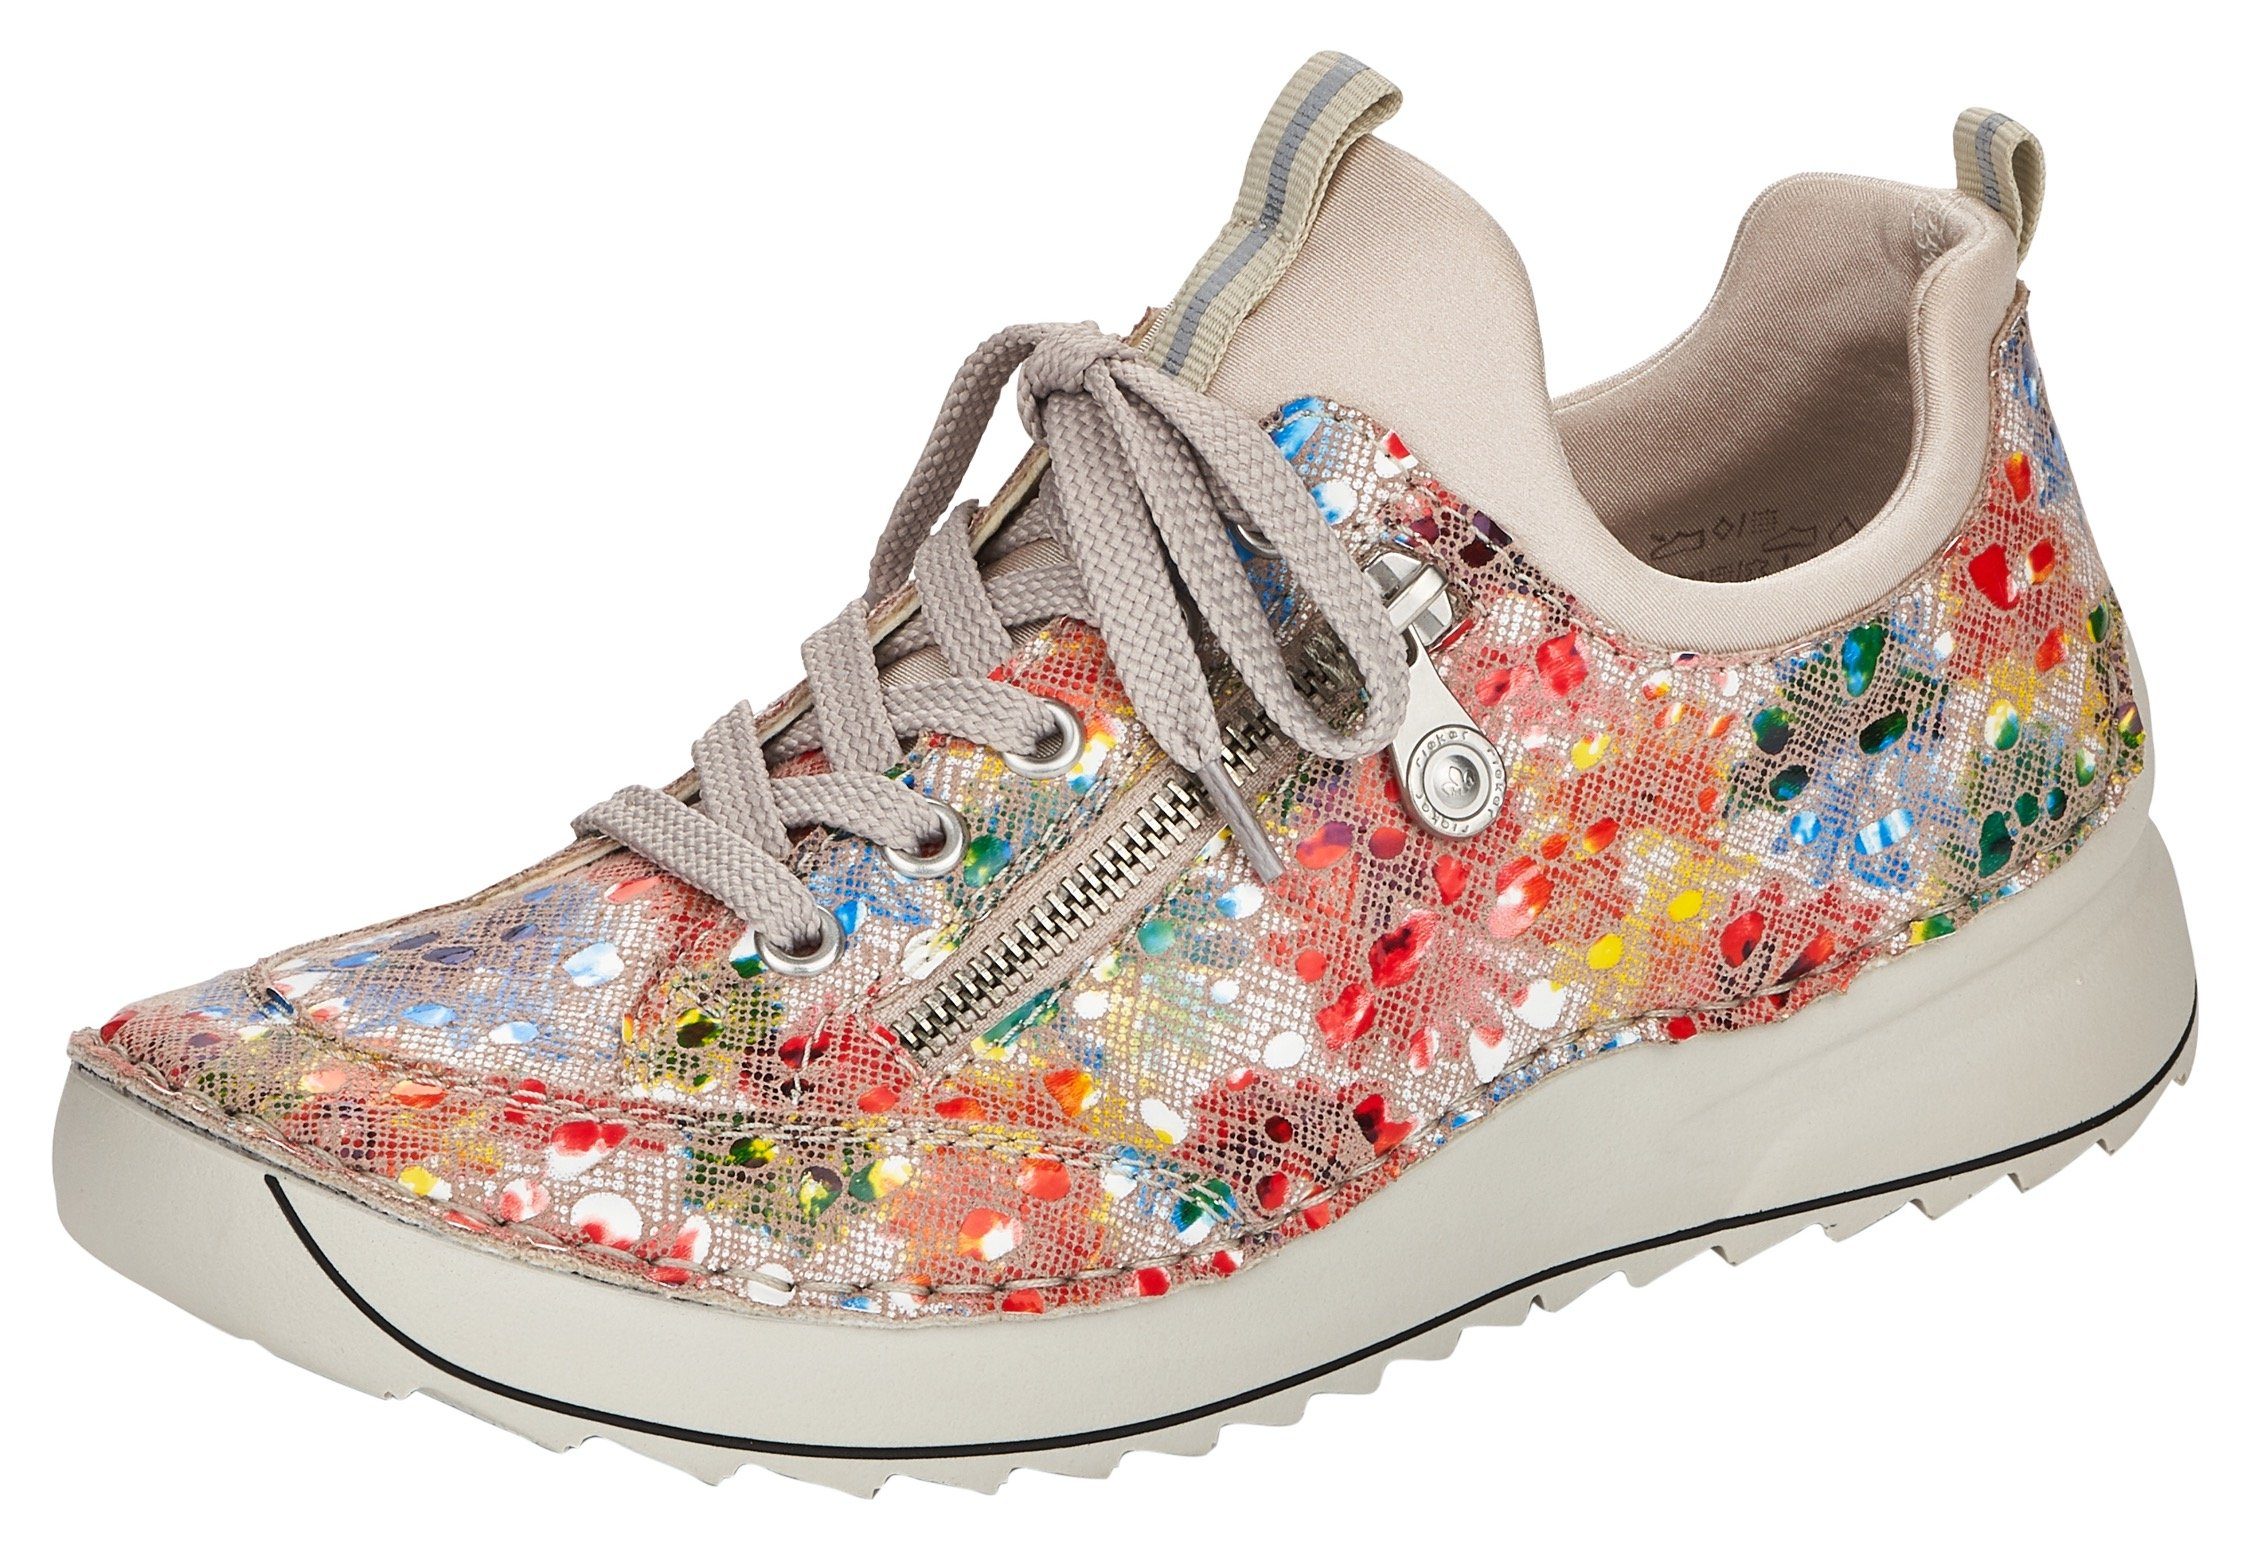 Visser Pijl Verwaarlozing Rieker Slip-on sneakers met leuke bloemenprint online verkrijgbaar | OTTO